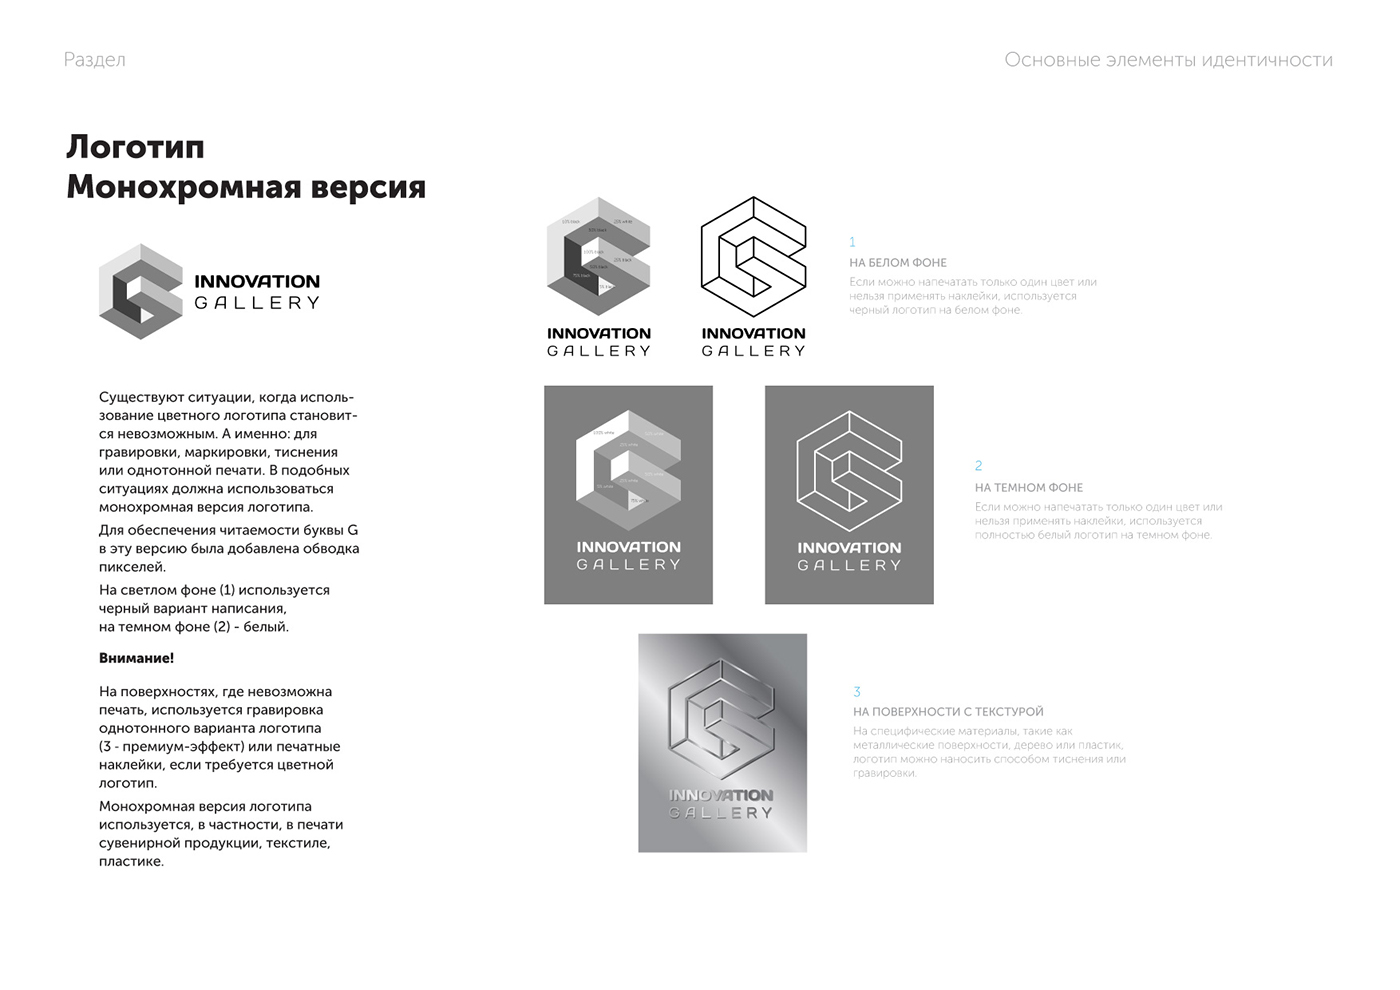 brandbook logodesign gig kiev Katya Dziadok guidelines Gorodok GorodokInnovationGallery identity logo